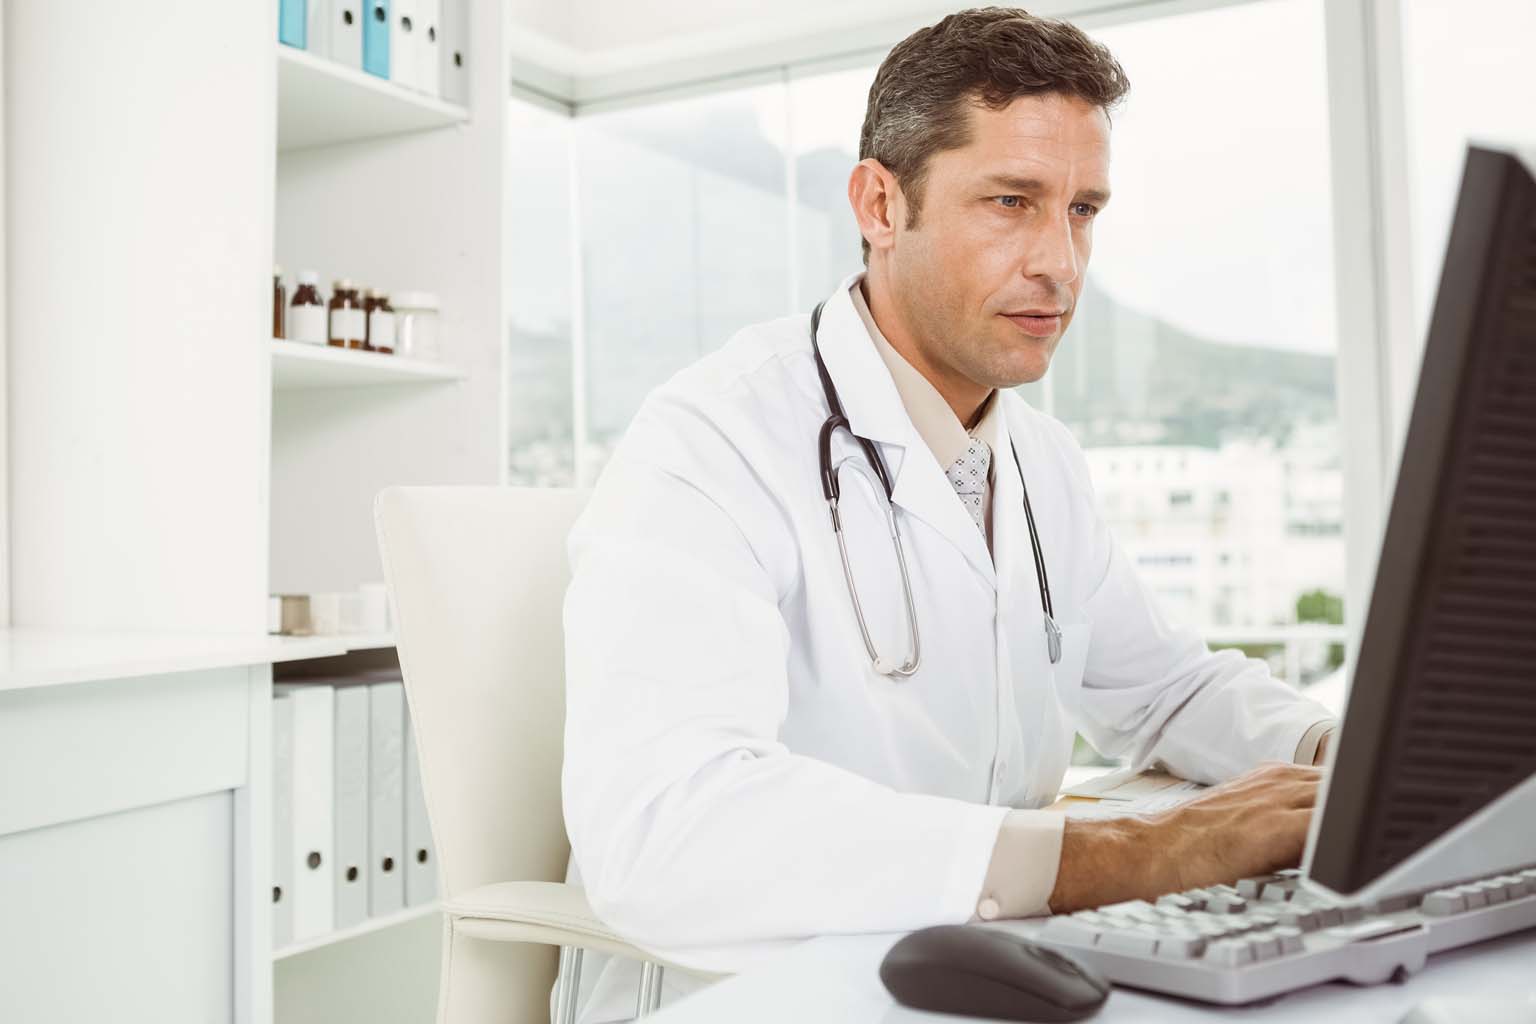 pharmacist using computer in pharmacy